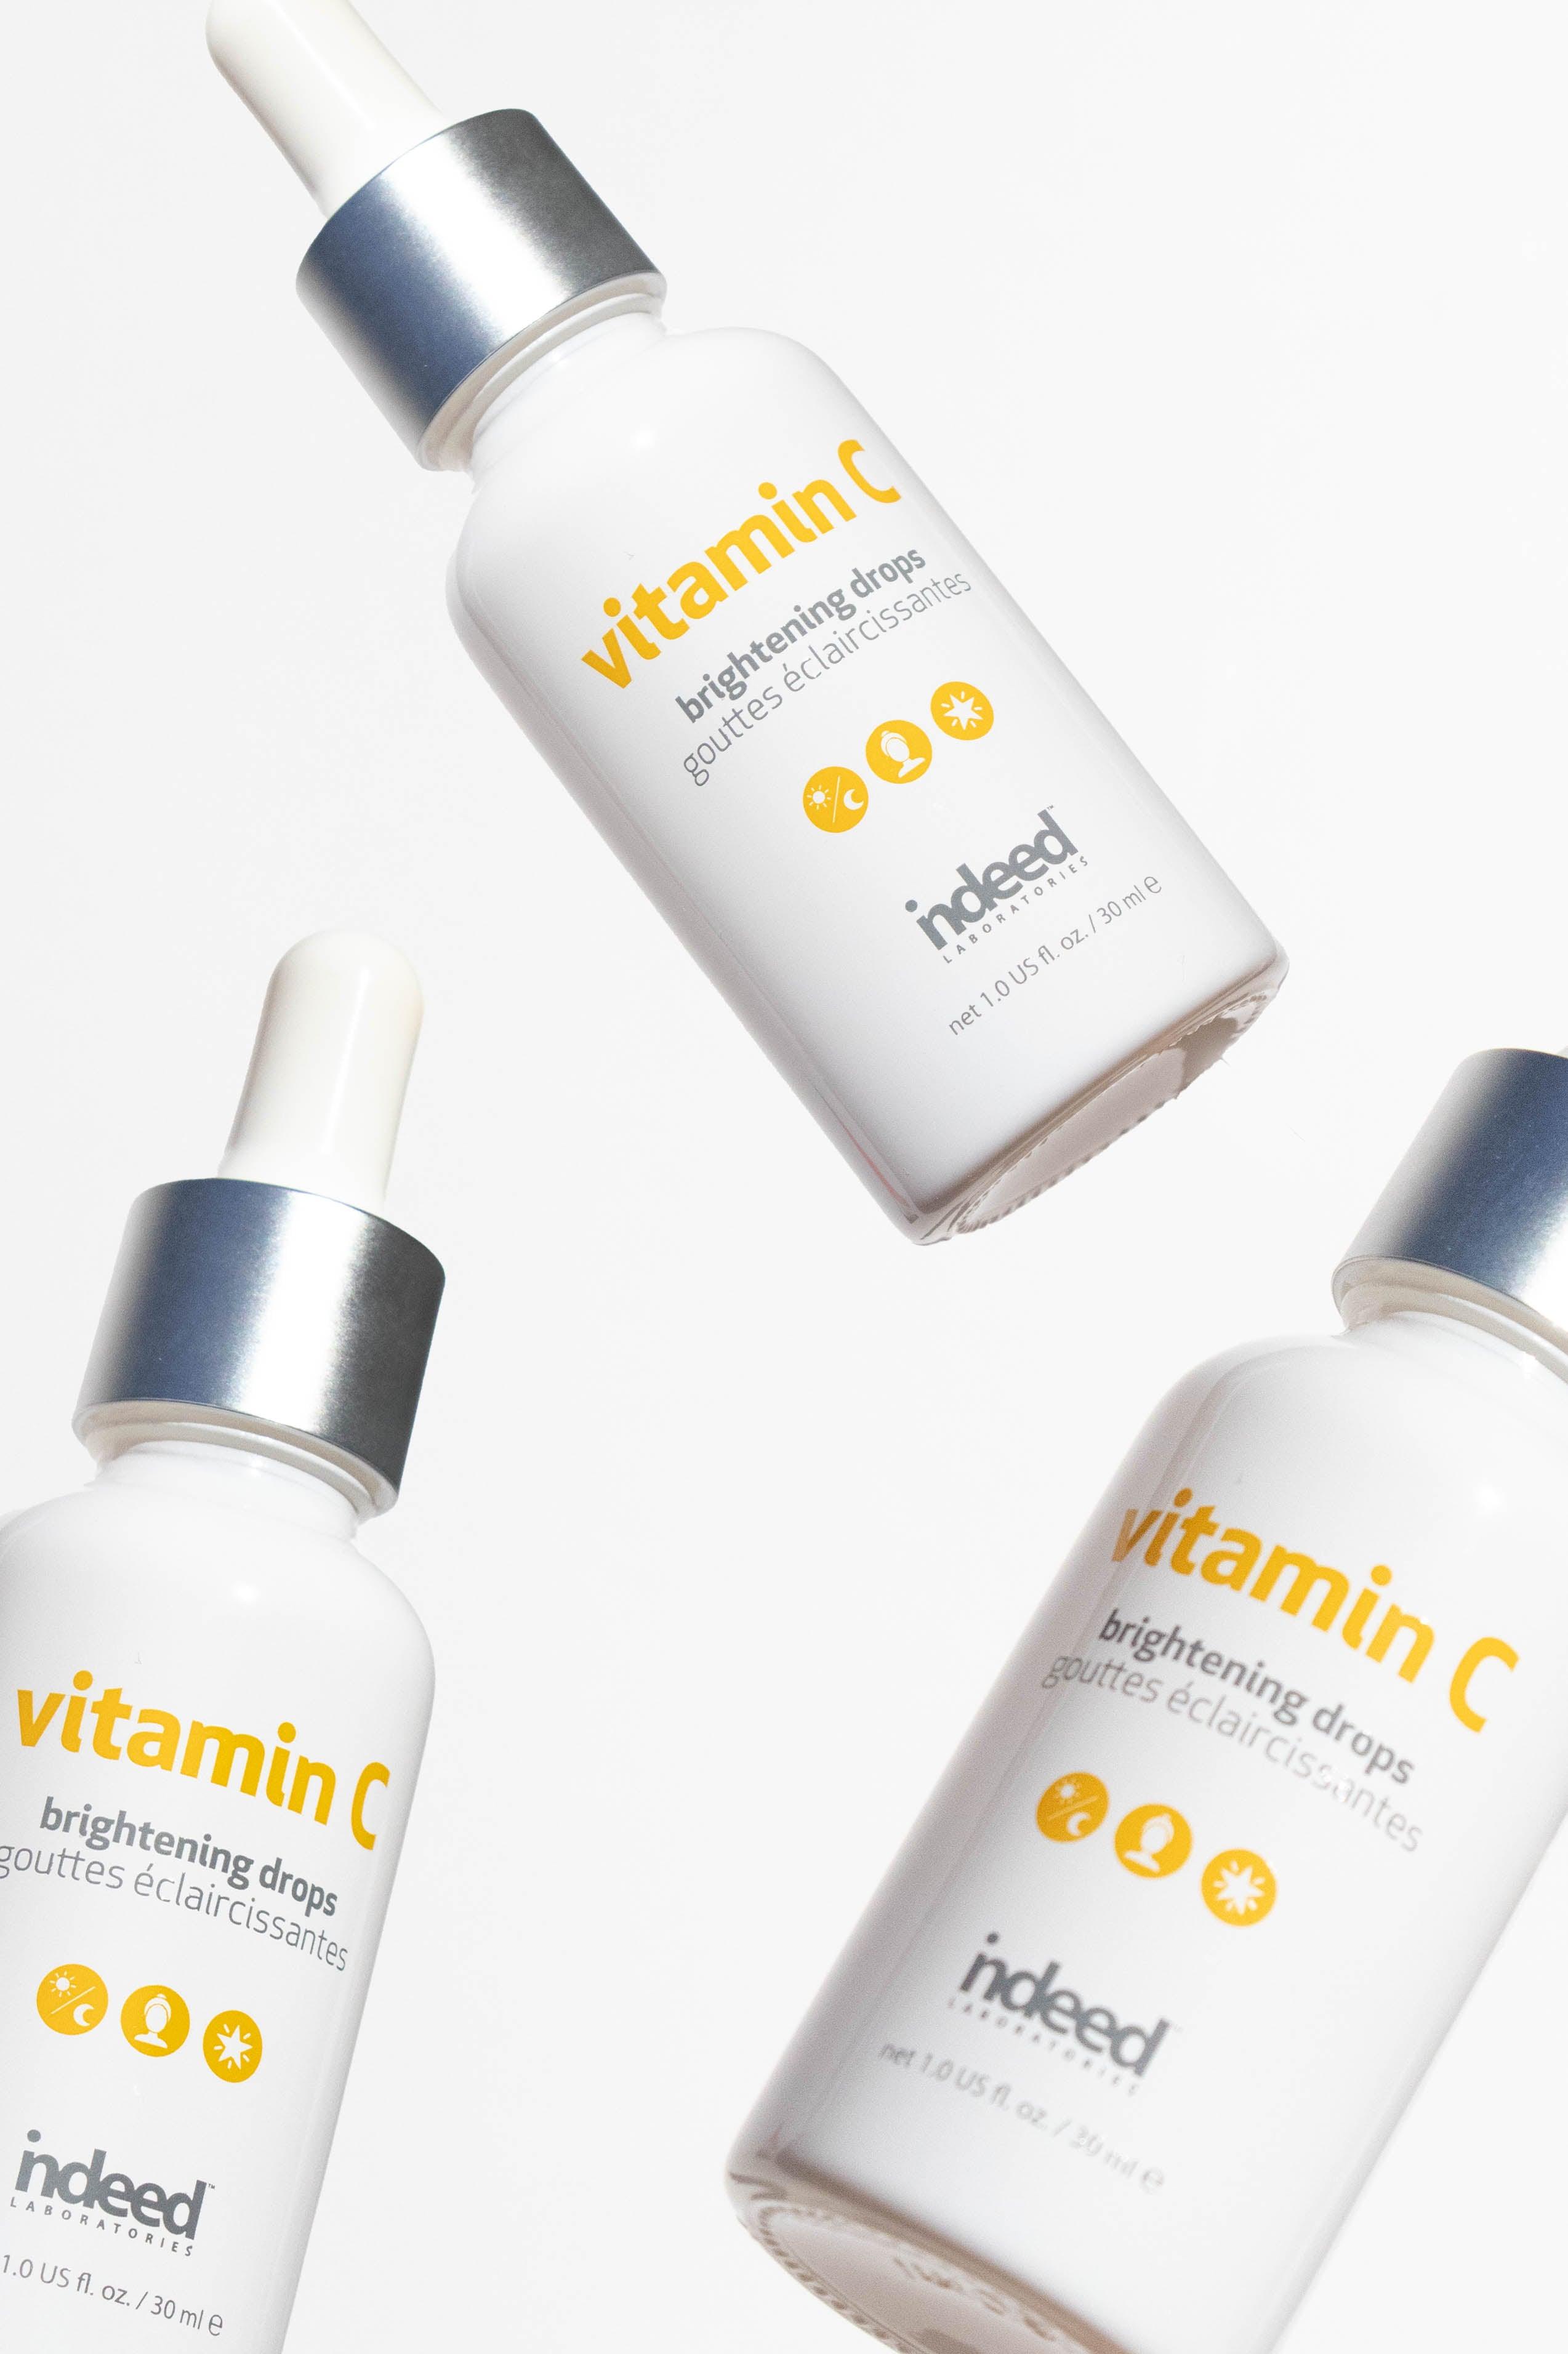 vitamin C brightening drops – Indeed laboratories